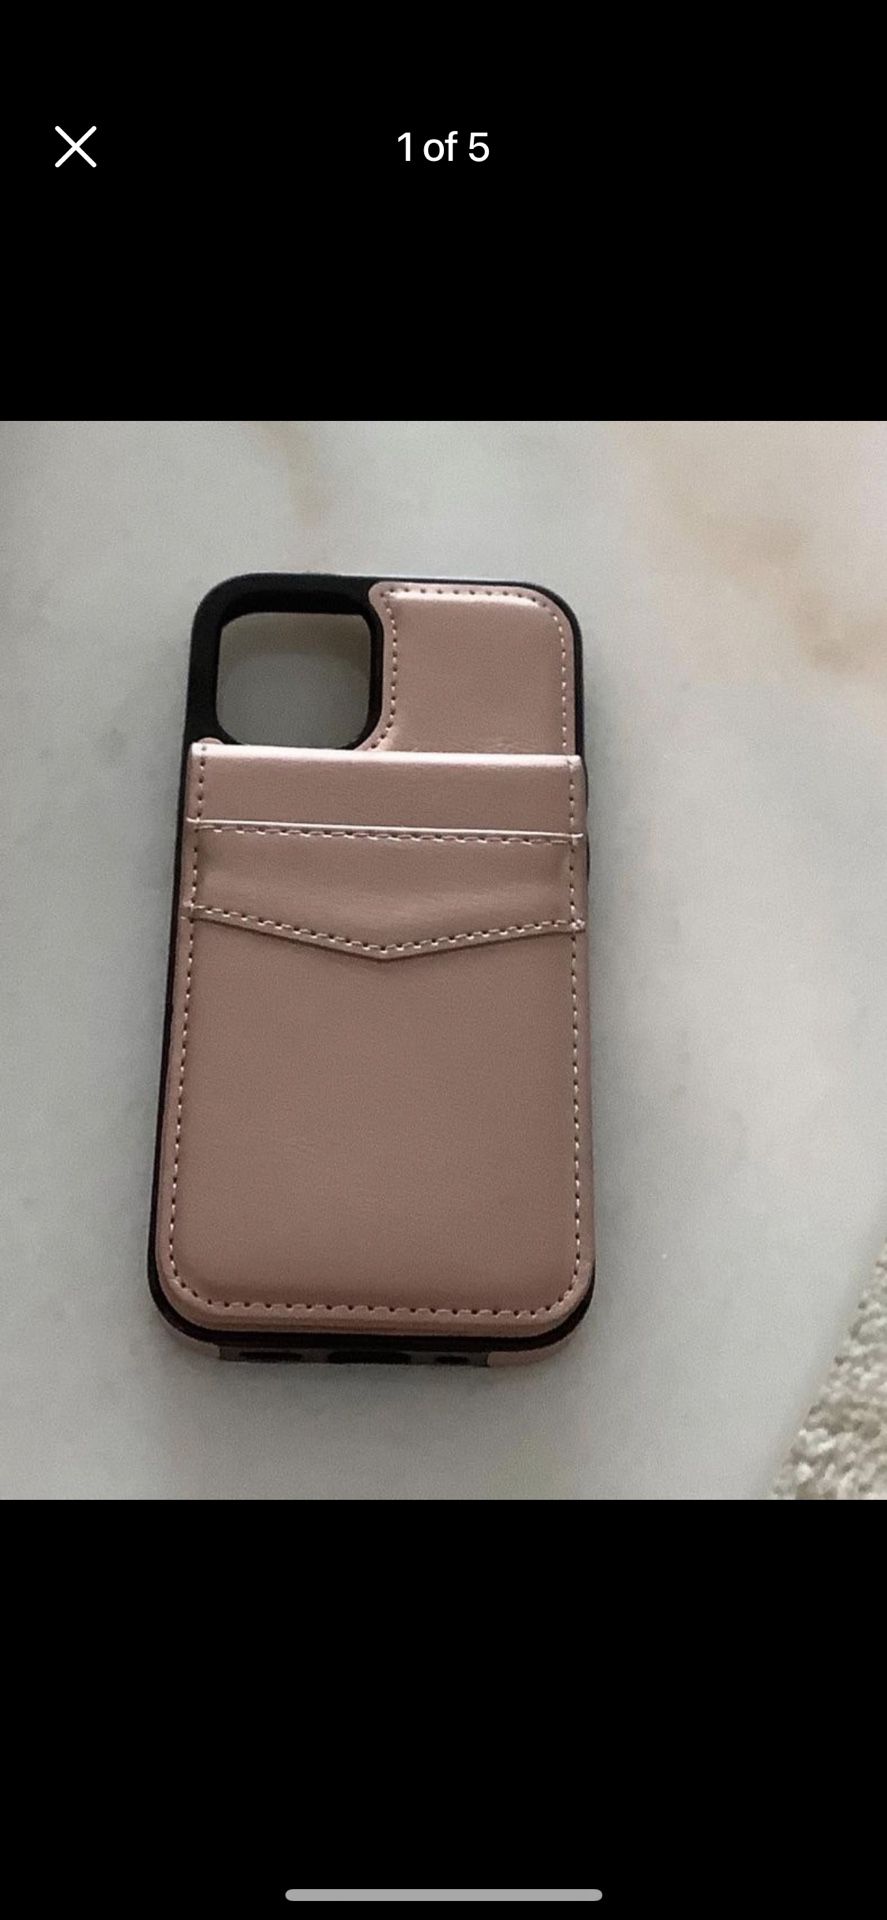 Iphone 12 Mini Wallet Case